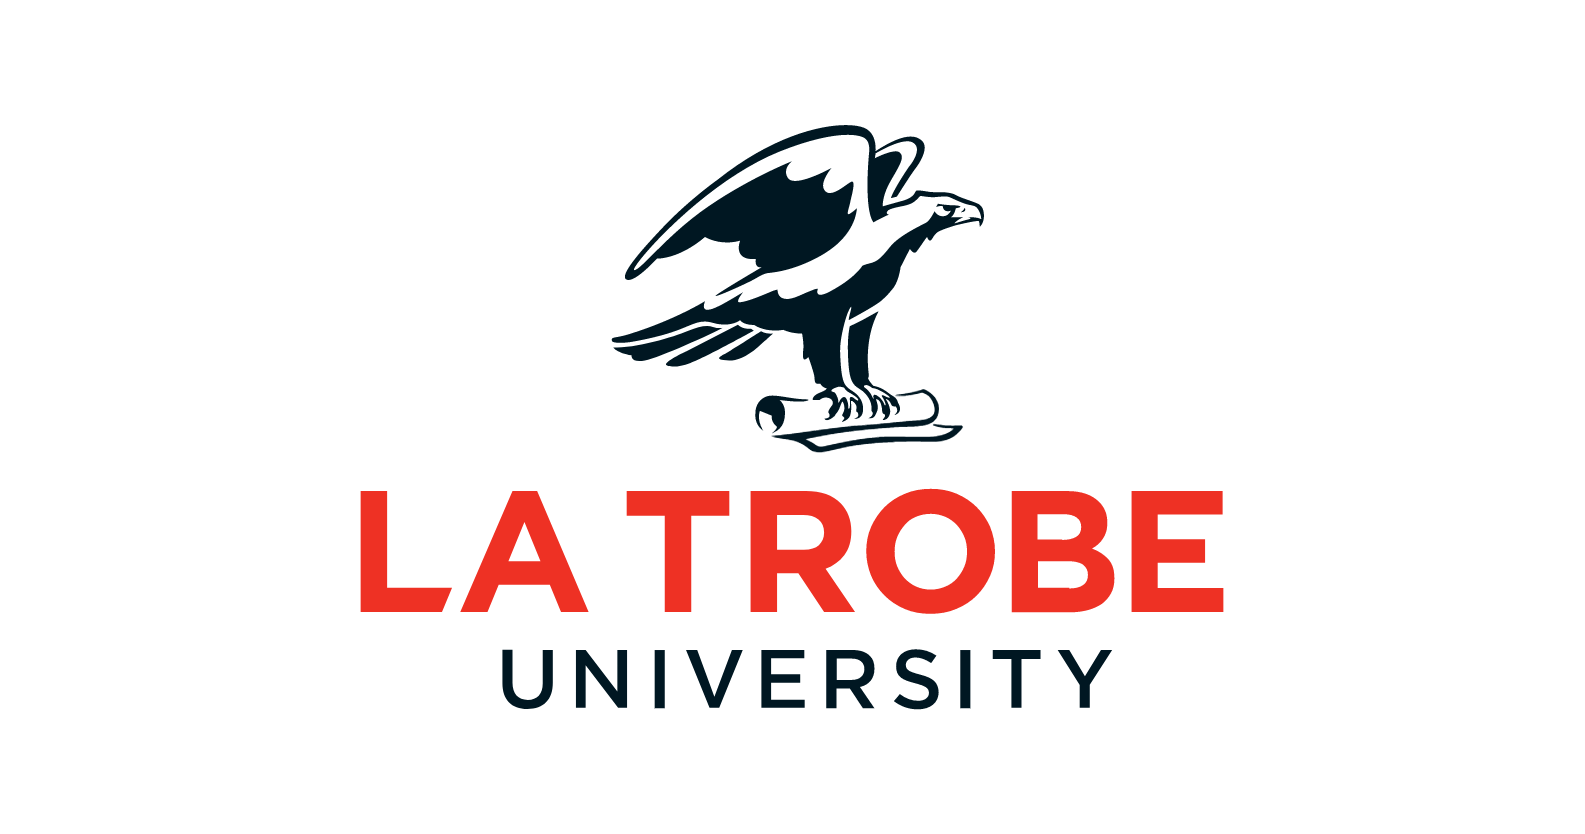 Students, La Trobe University